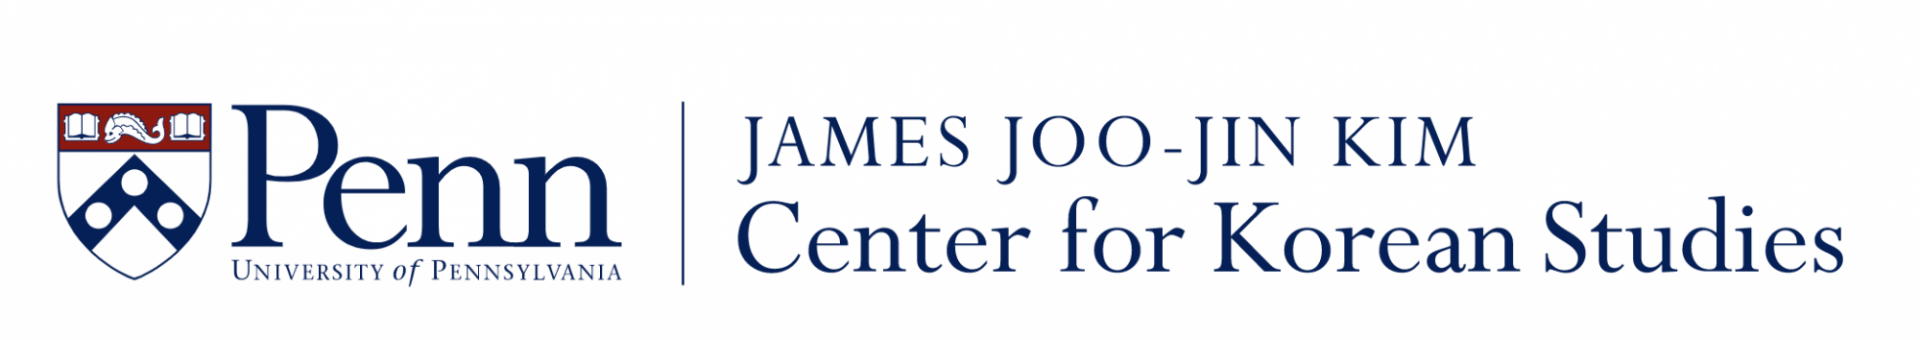 James Joo-Jin Kim Center